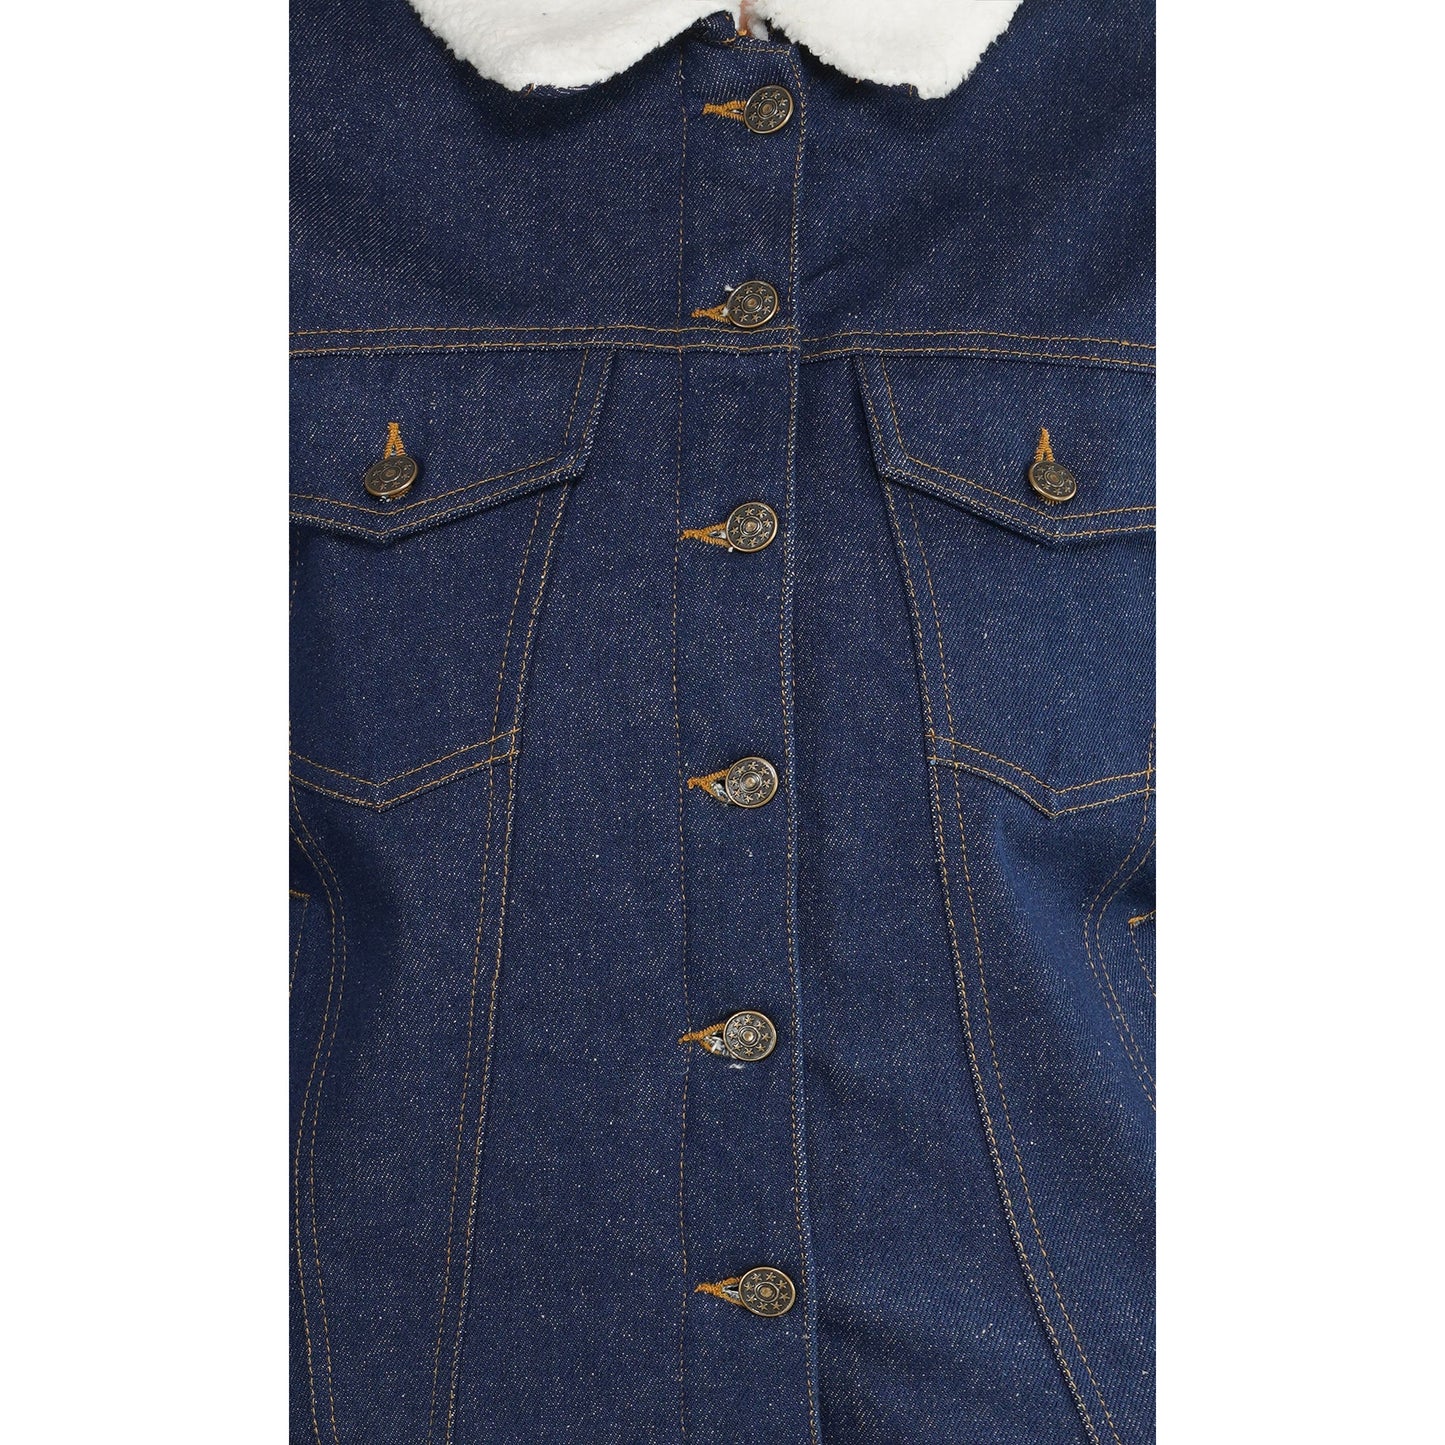 SLAY. Women's Embroidered Denim Navy Blue Jacket with Faux-fur Lining-clothing-to-slay.myshopify.com-Denim Jacket